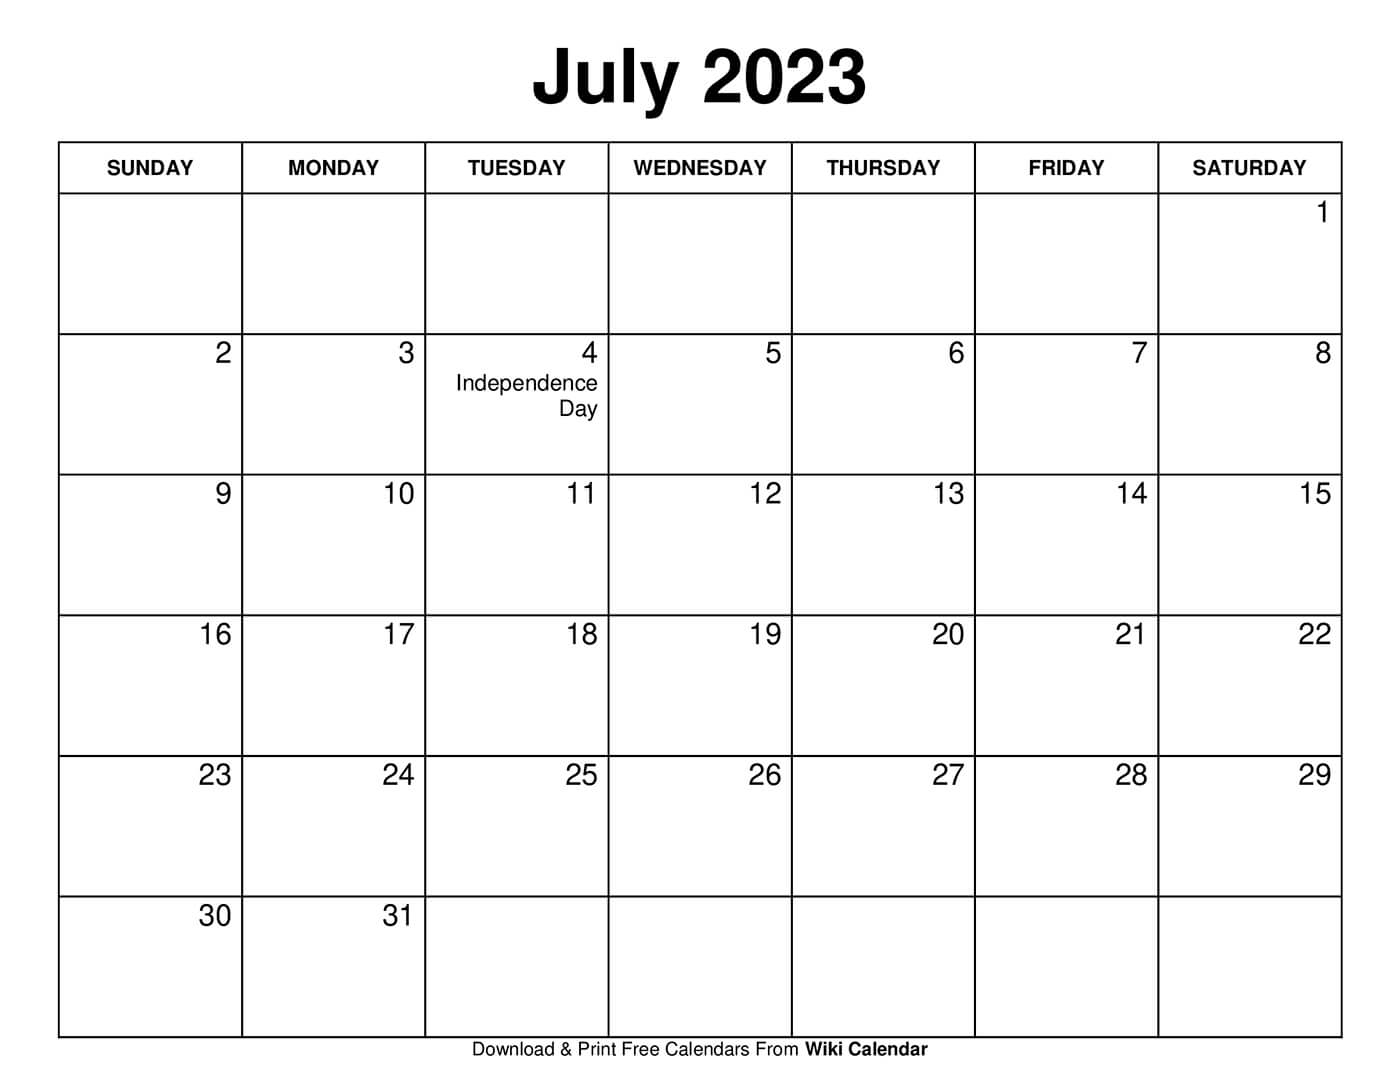 free-printable-july-2023-calendars